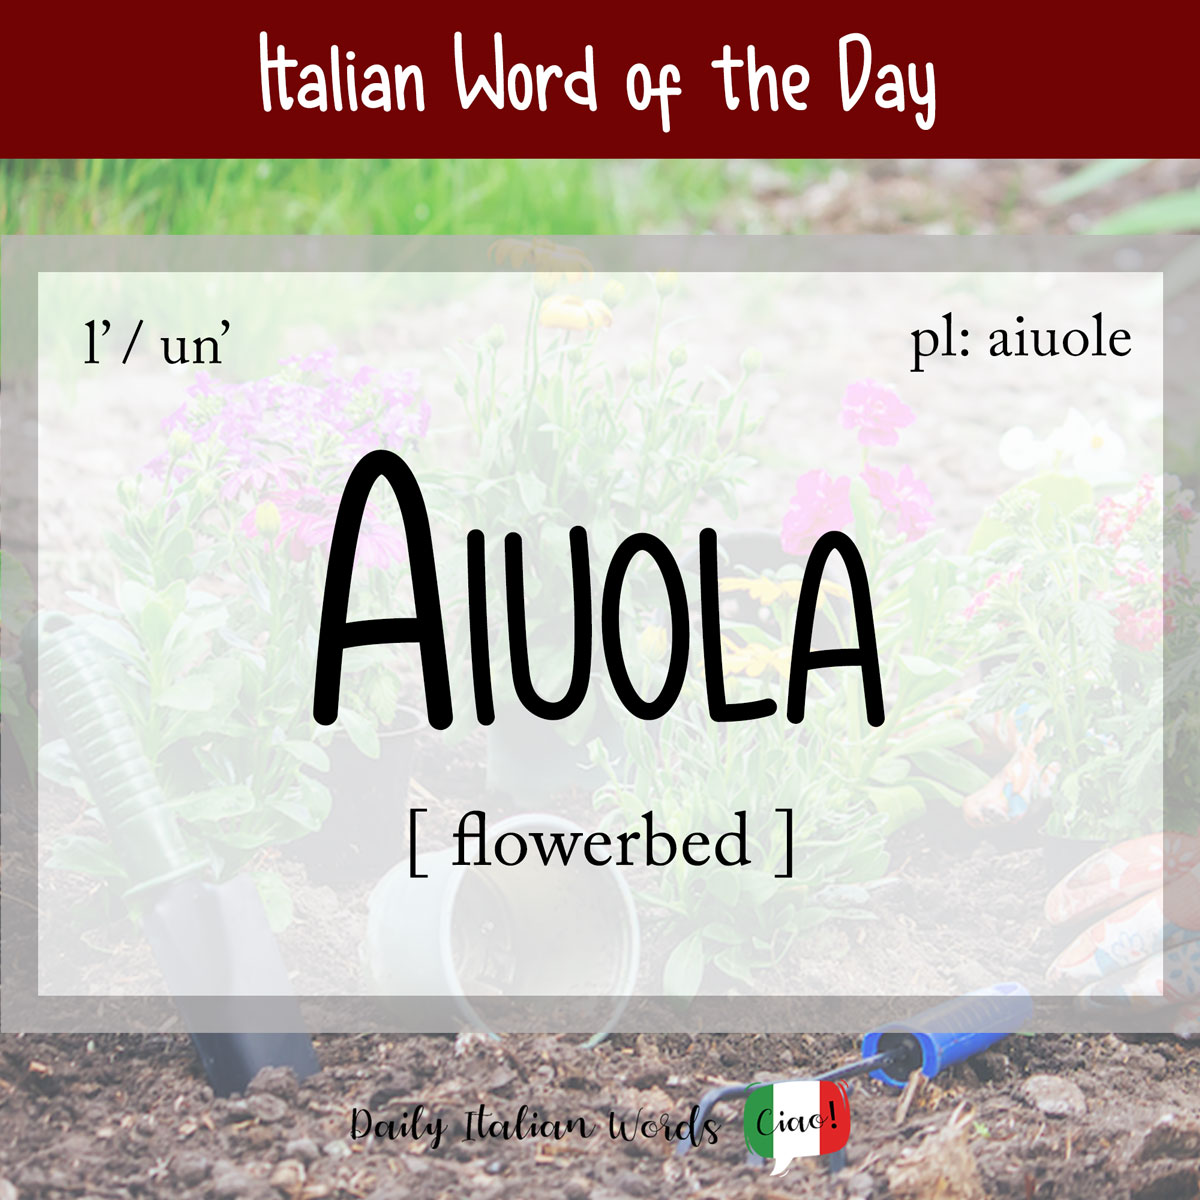 Italian Word of the Day Aiuola (flowerbed) LaptrinhX / News